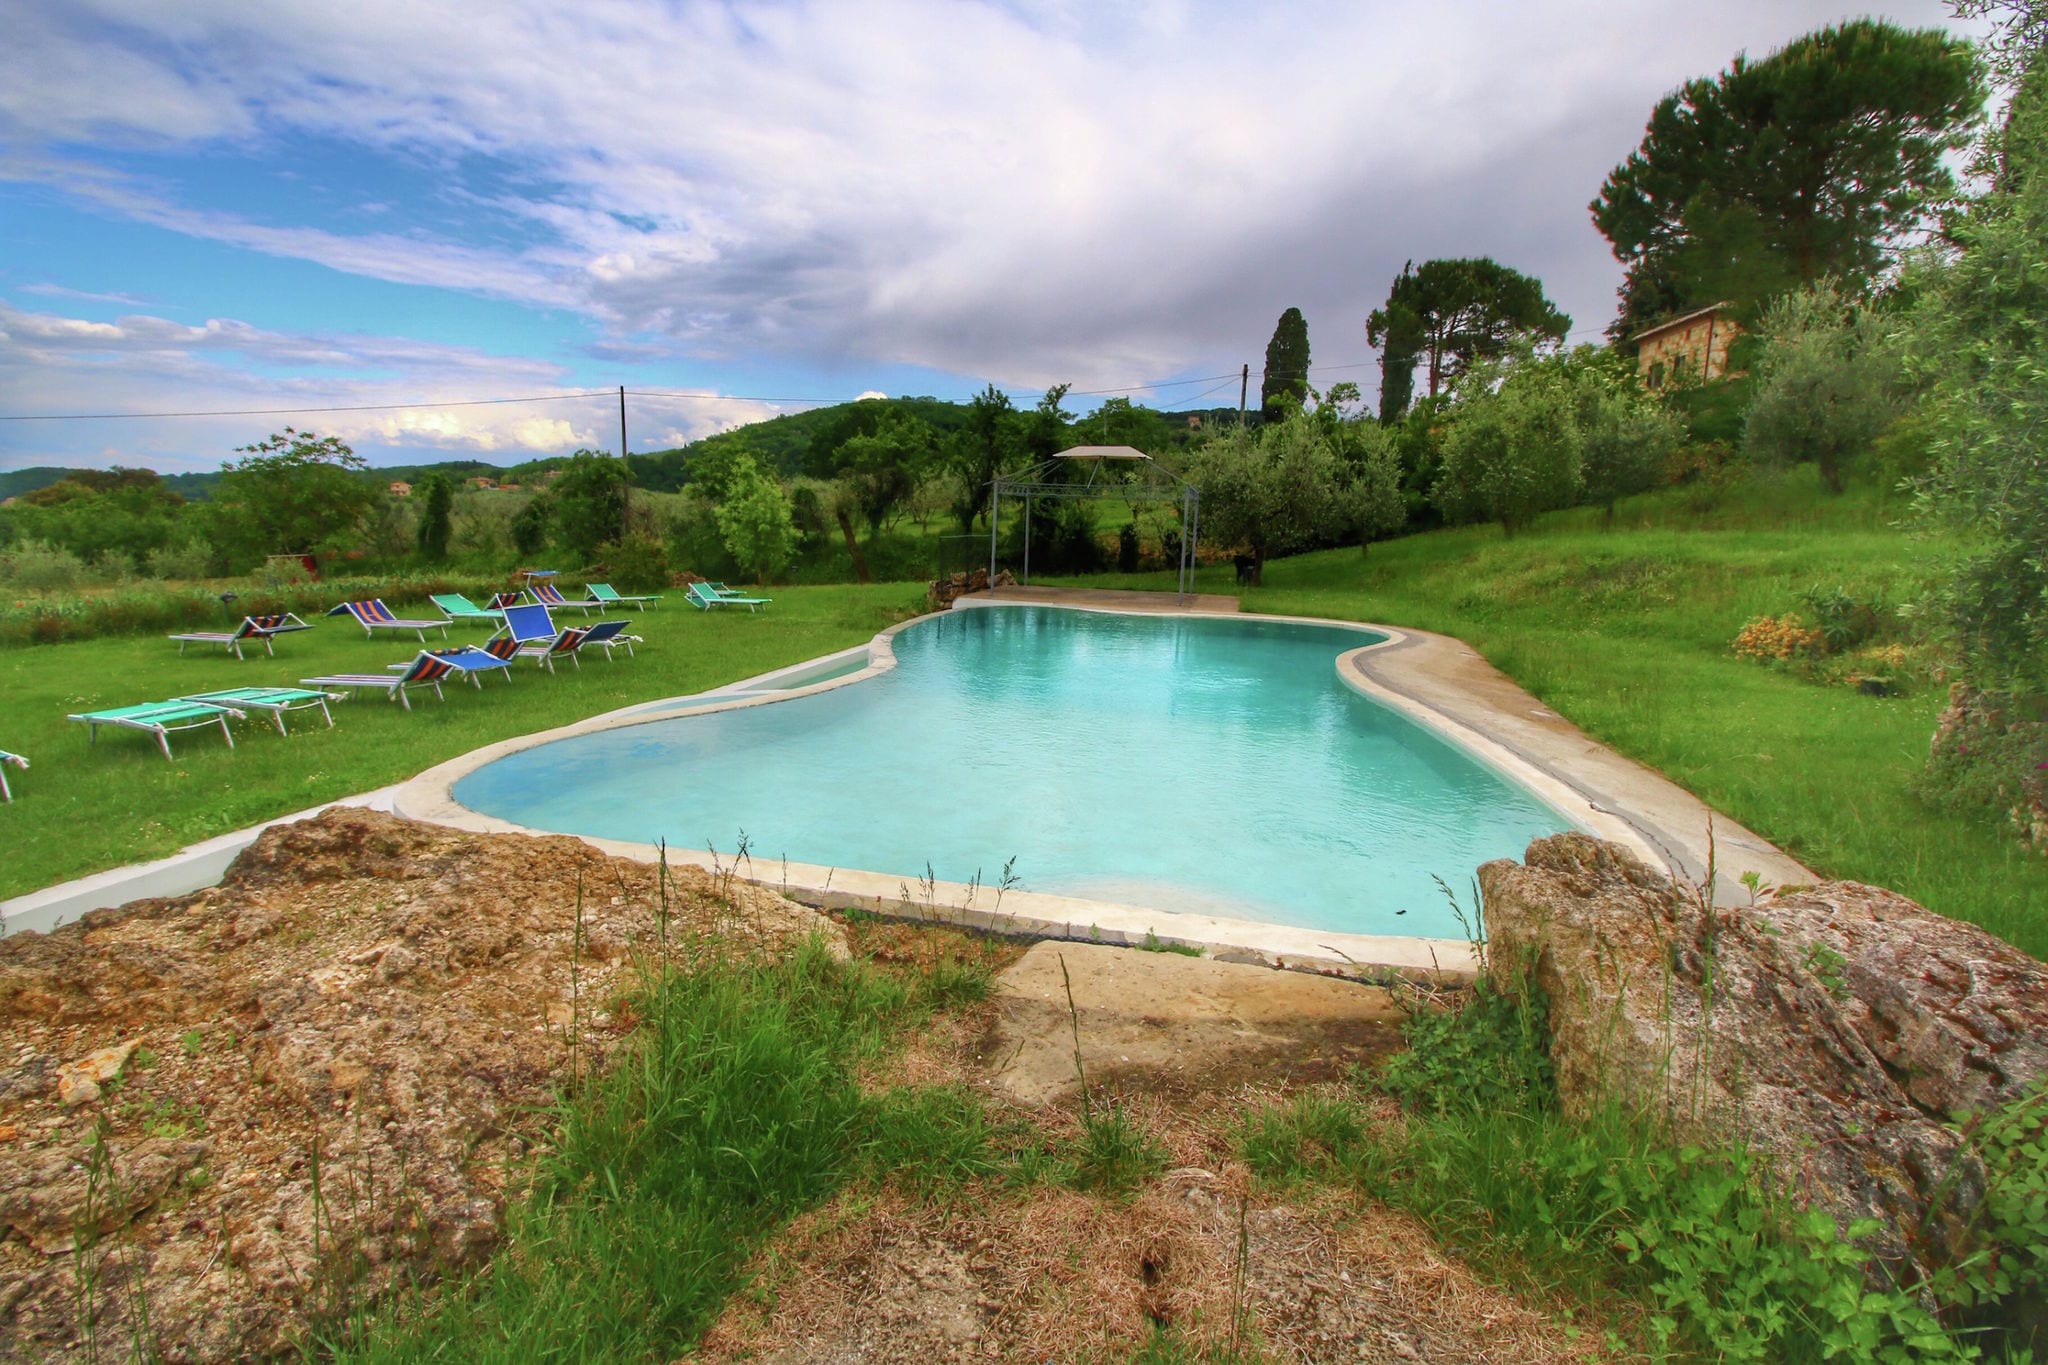 Rustic villa with private pool near Montepulciano, breathtaking views